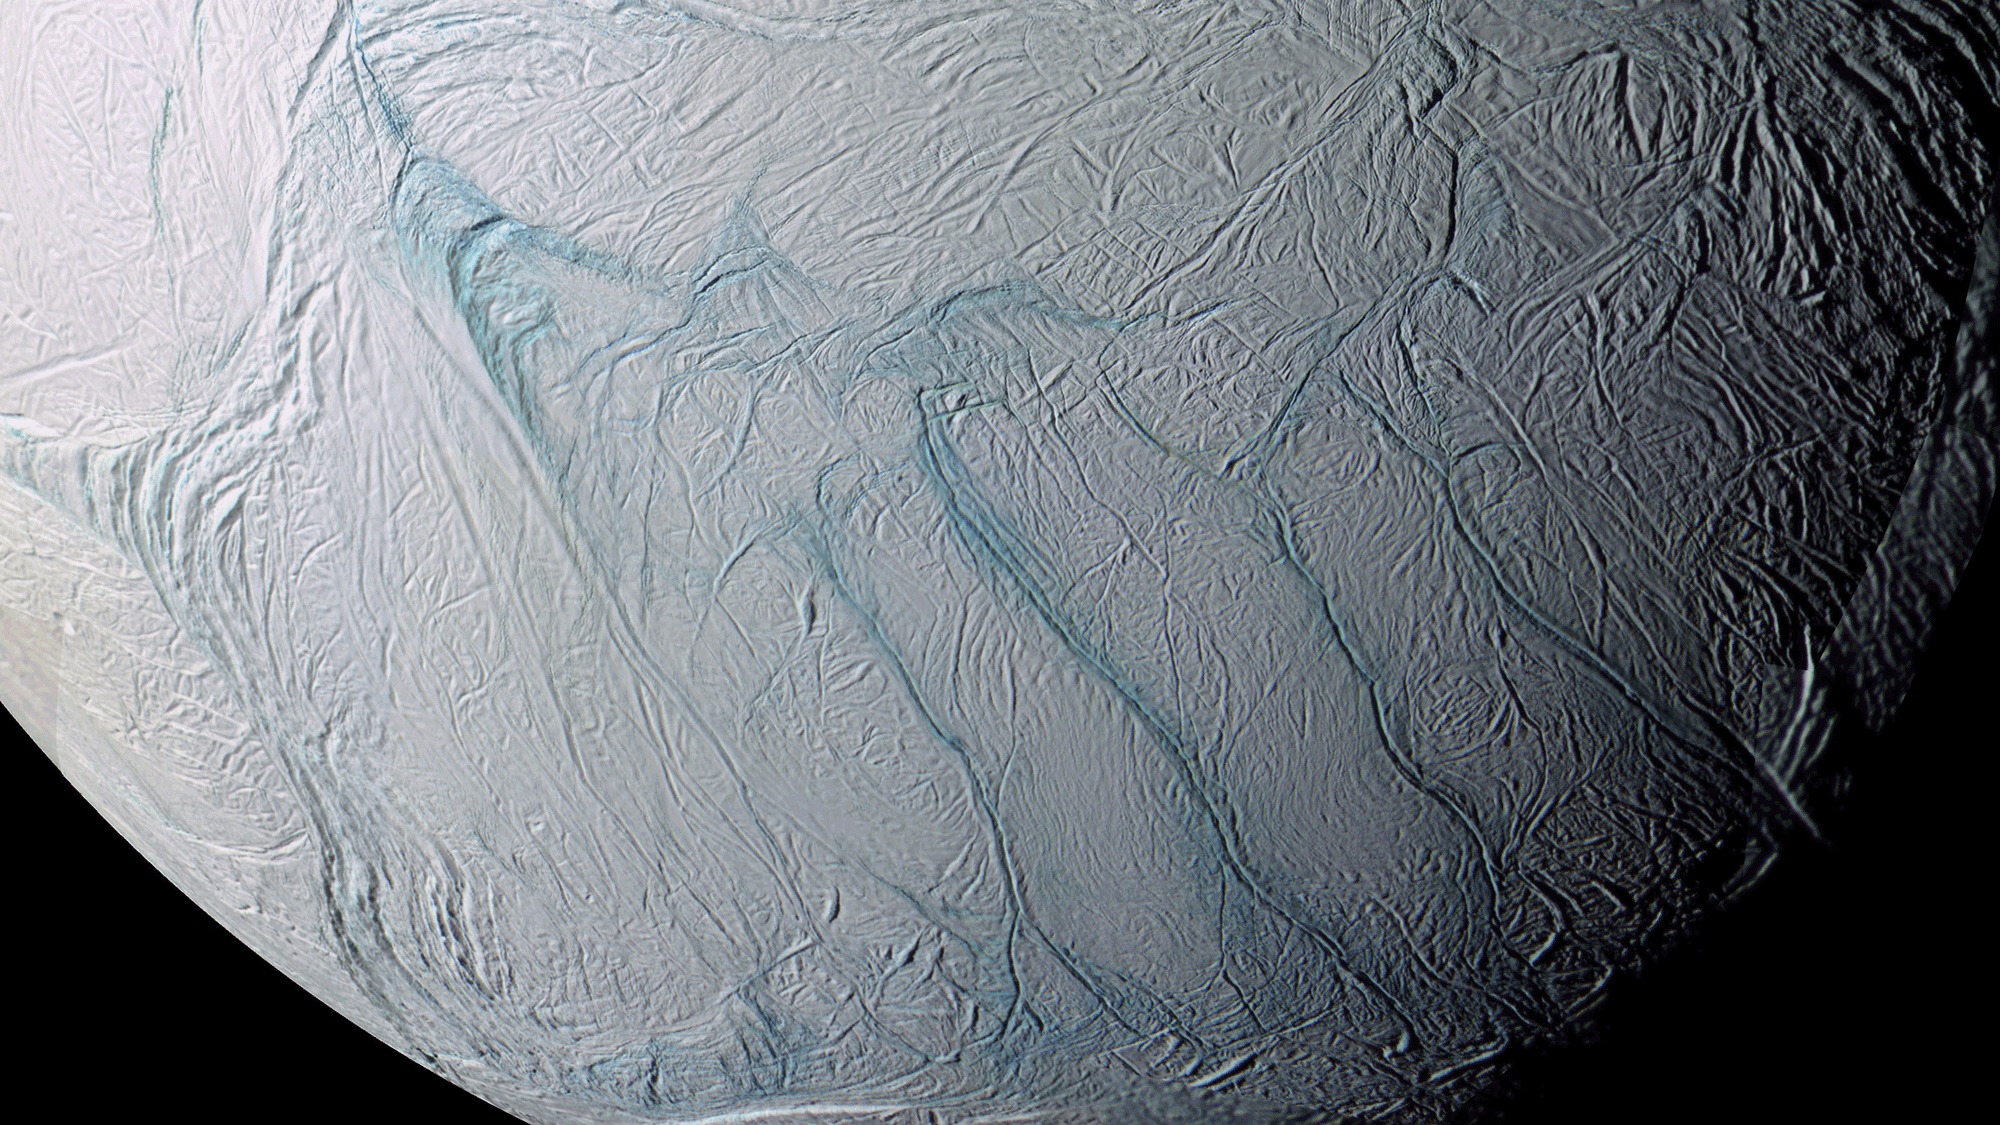 https://www.jpl.nasa.gov/edu/images/news/enceladus_tigerstripes.gif